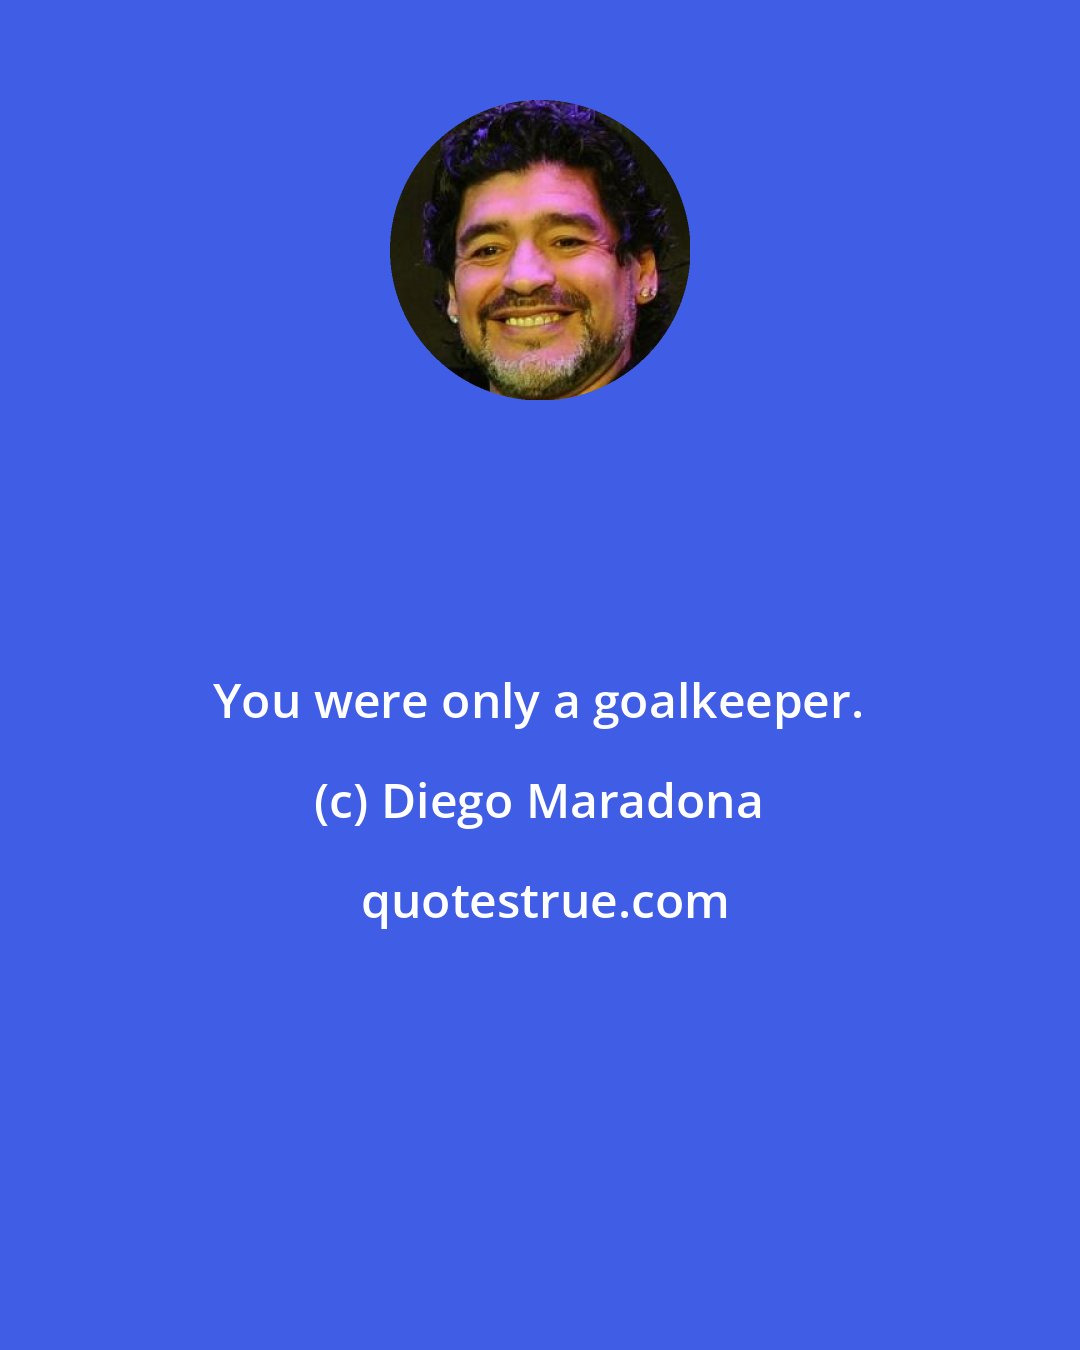 Diego Maradona: You were only a goalkeeper.